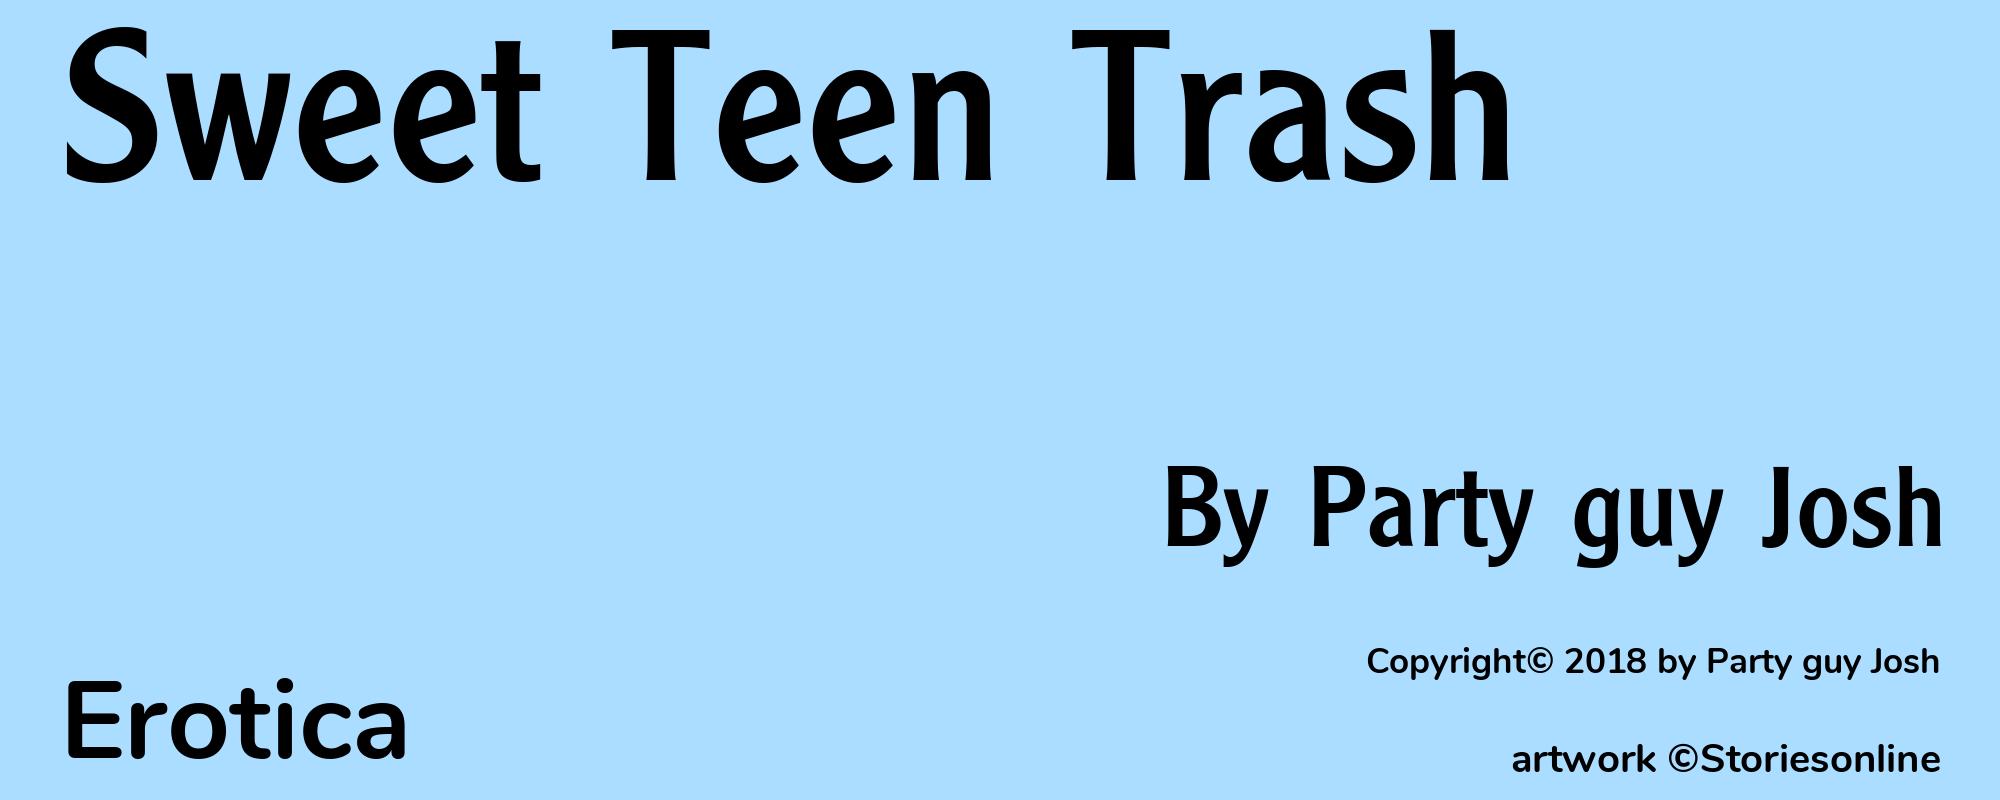 Sweet Teen Trash - Cover